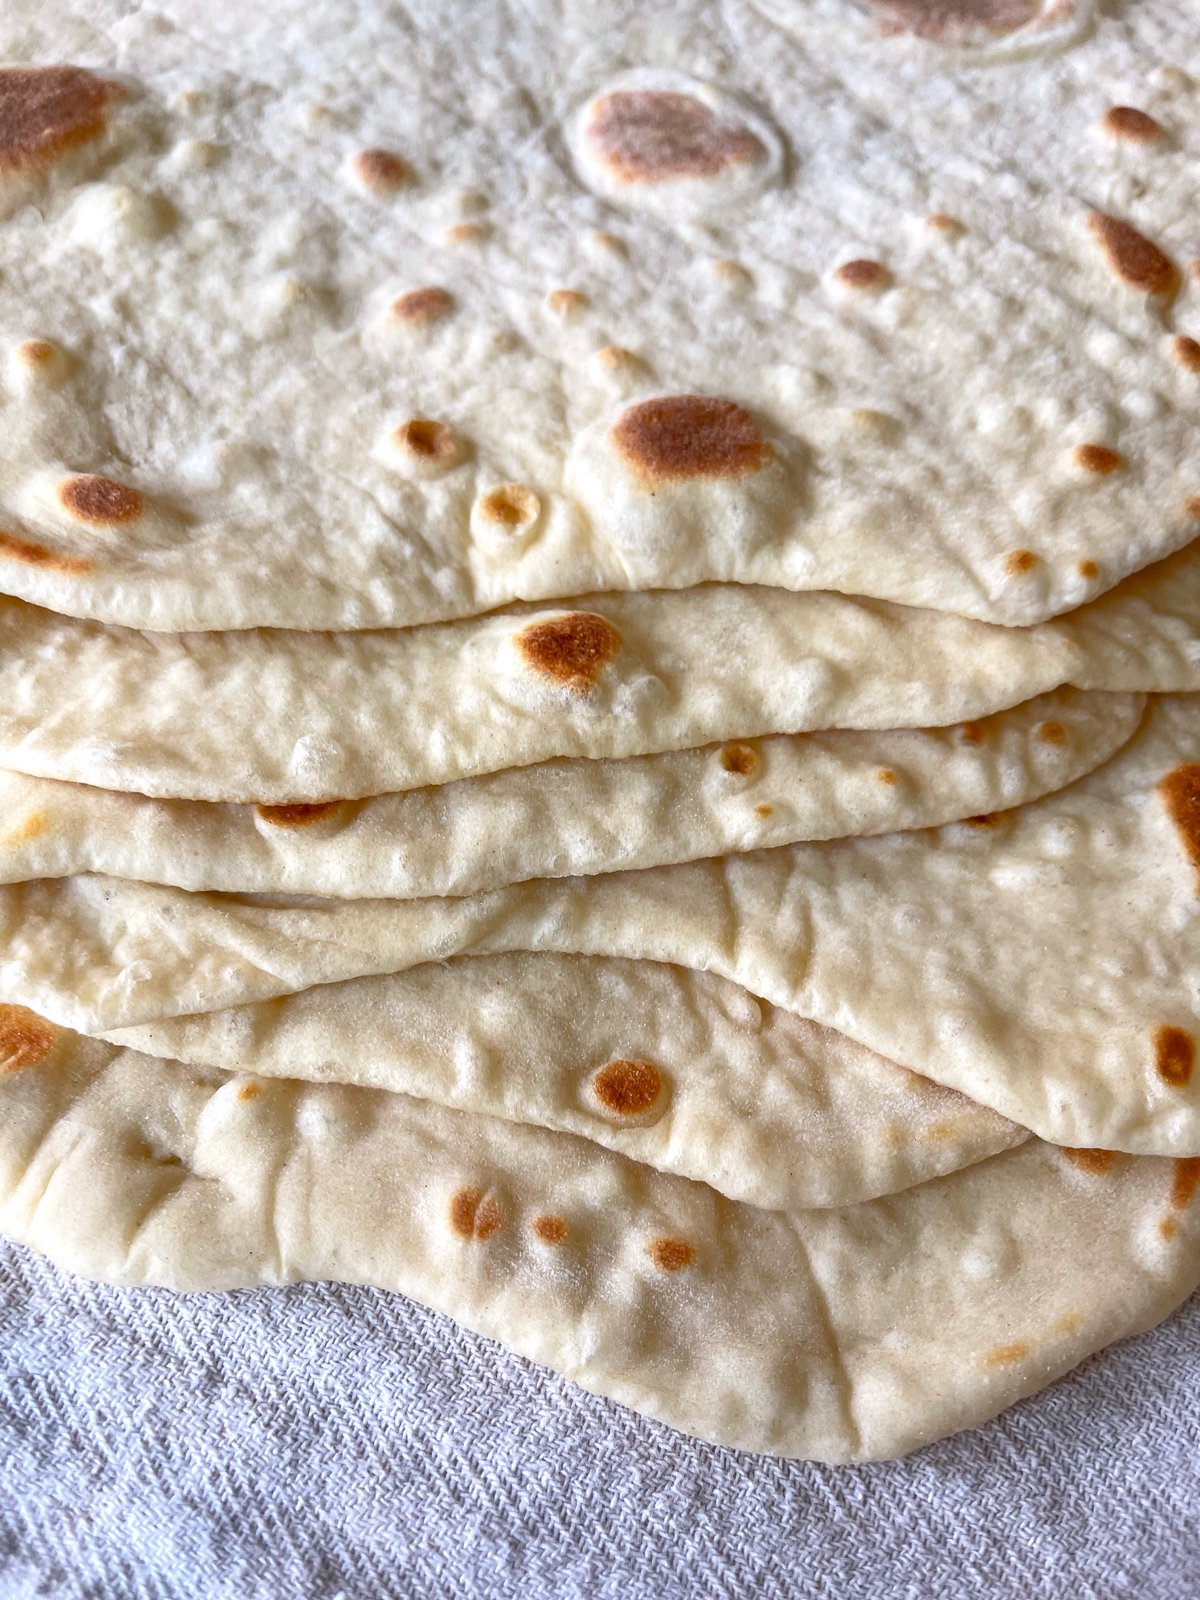 lavash recipe traditional flatbread armenian middle eastern iranian persian authentic yeast dough